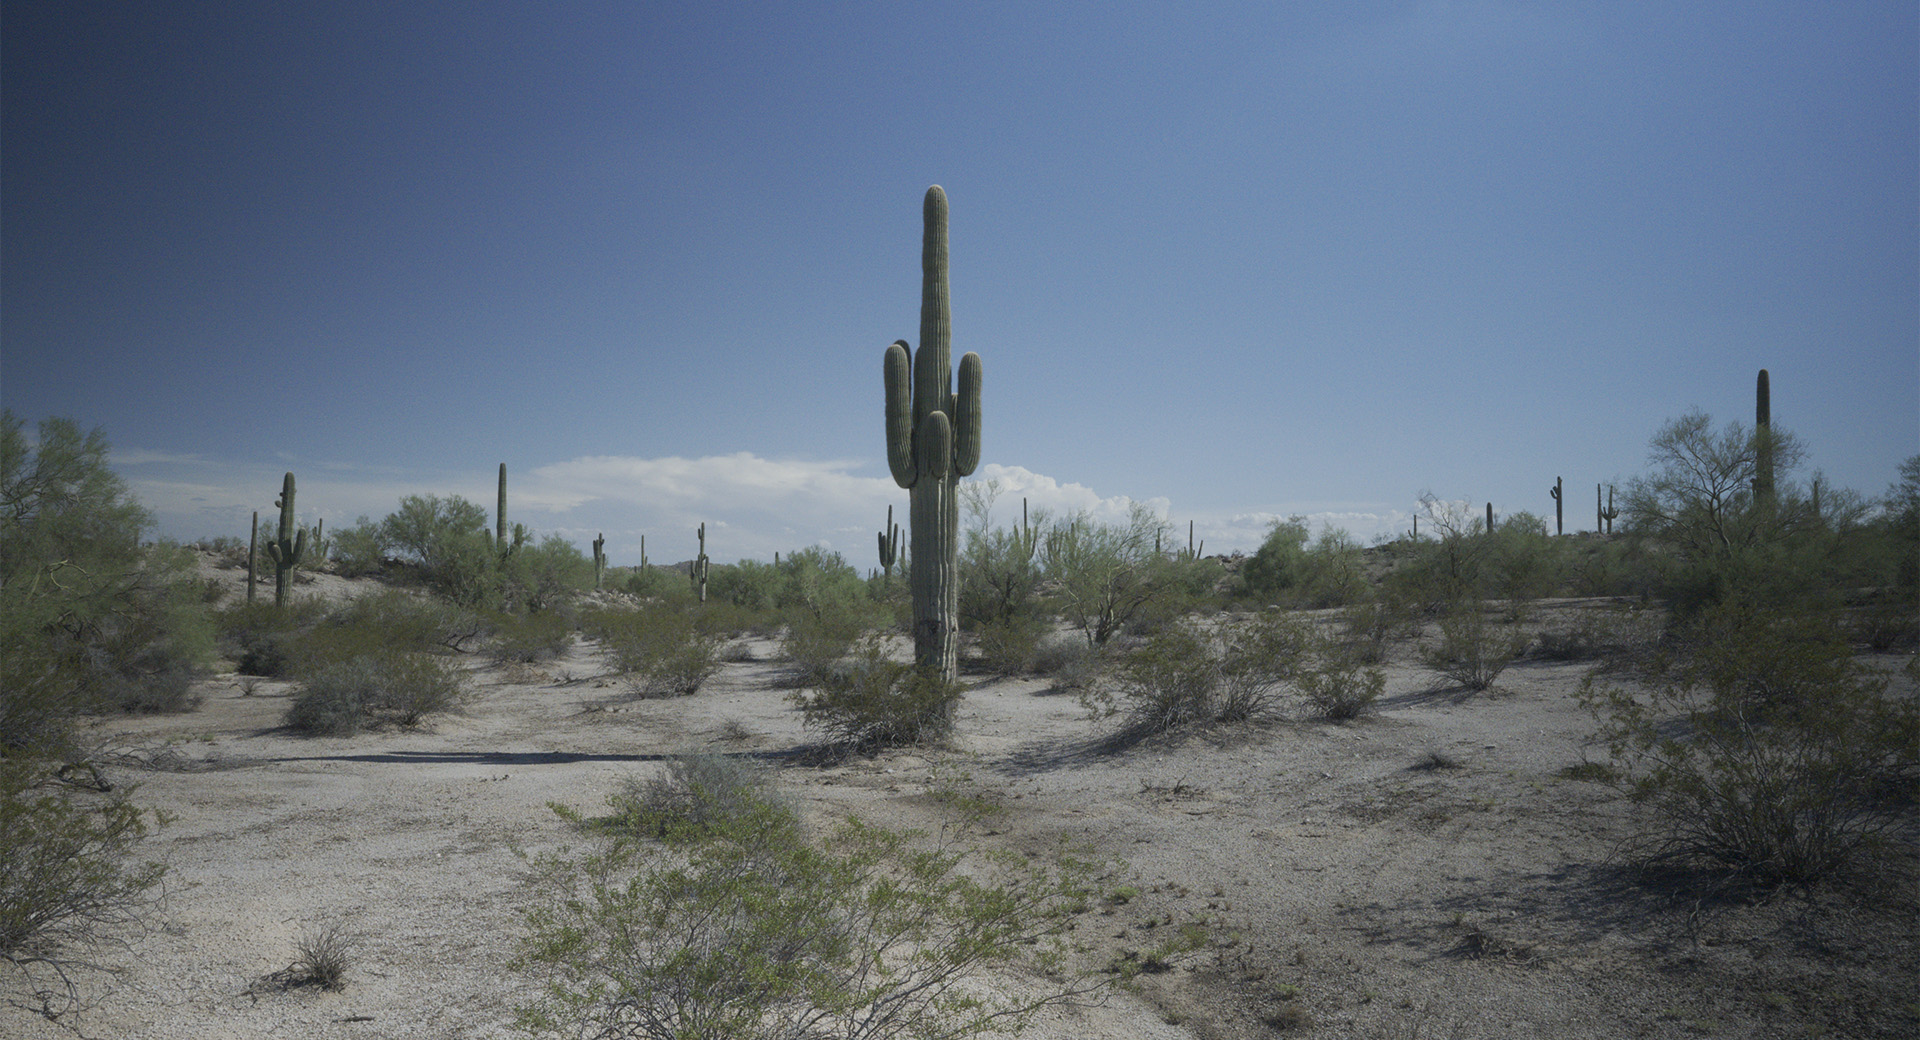 Saguaro cactus in the desert under a blue sky.